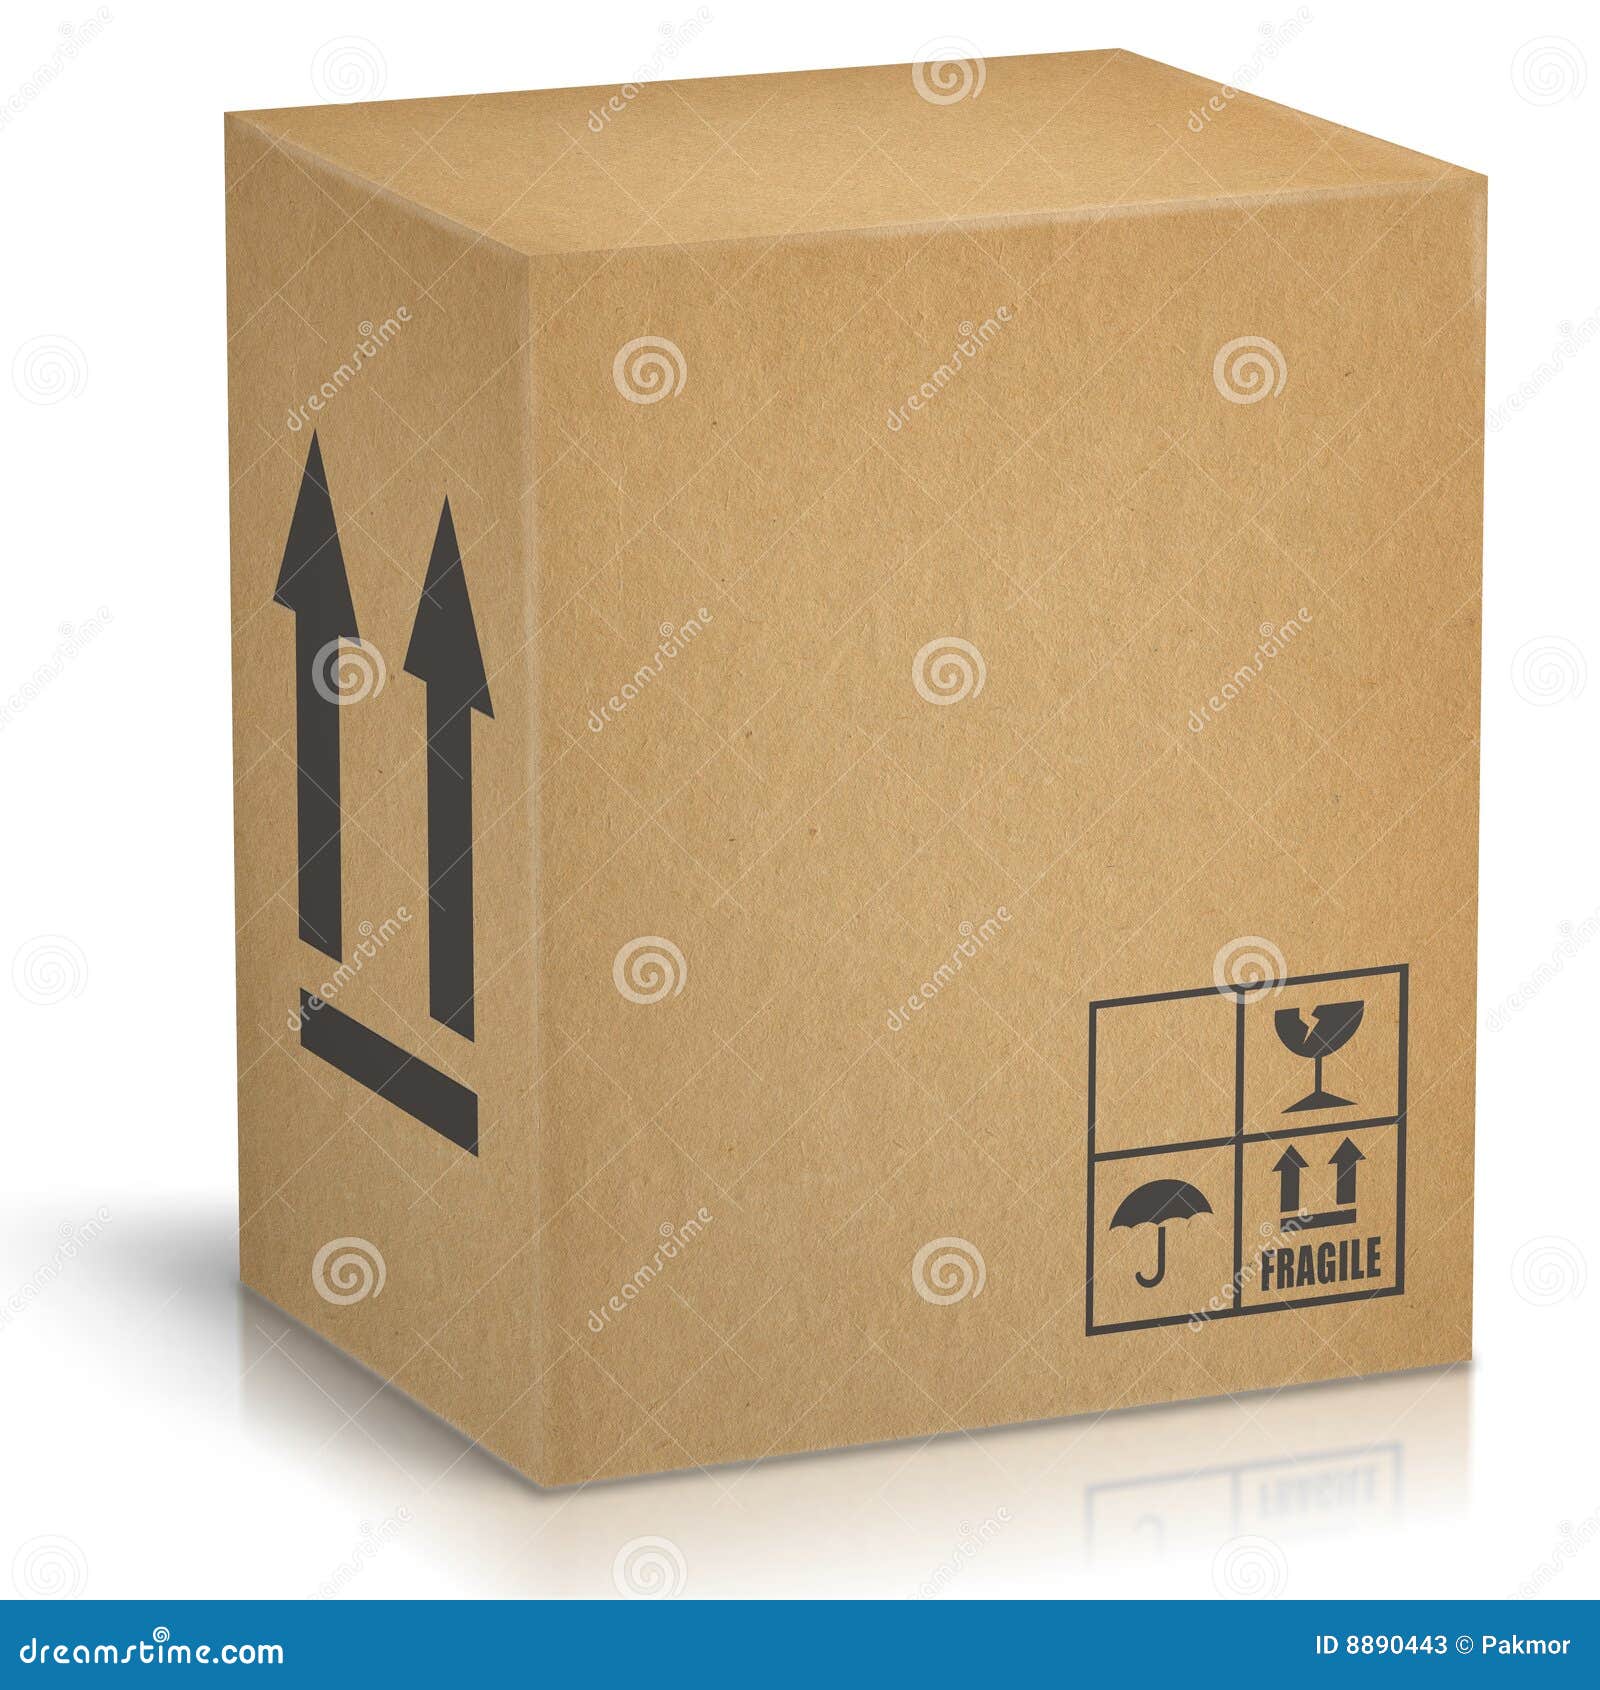 Cardboard boxes stock illustration. Illustration of packaging - 8890443